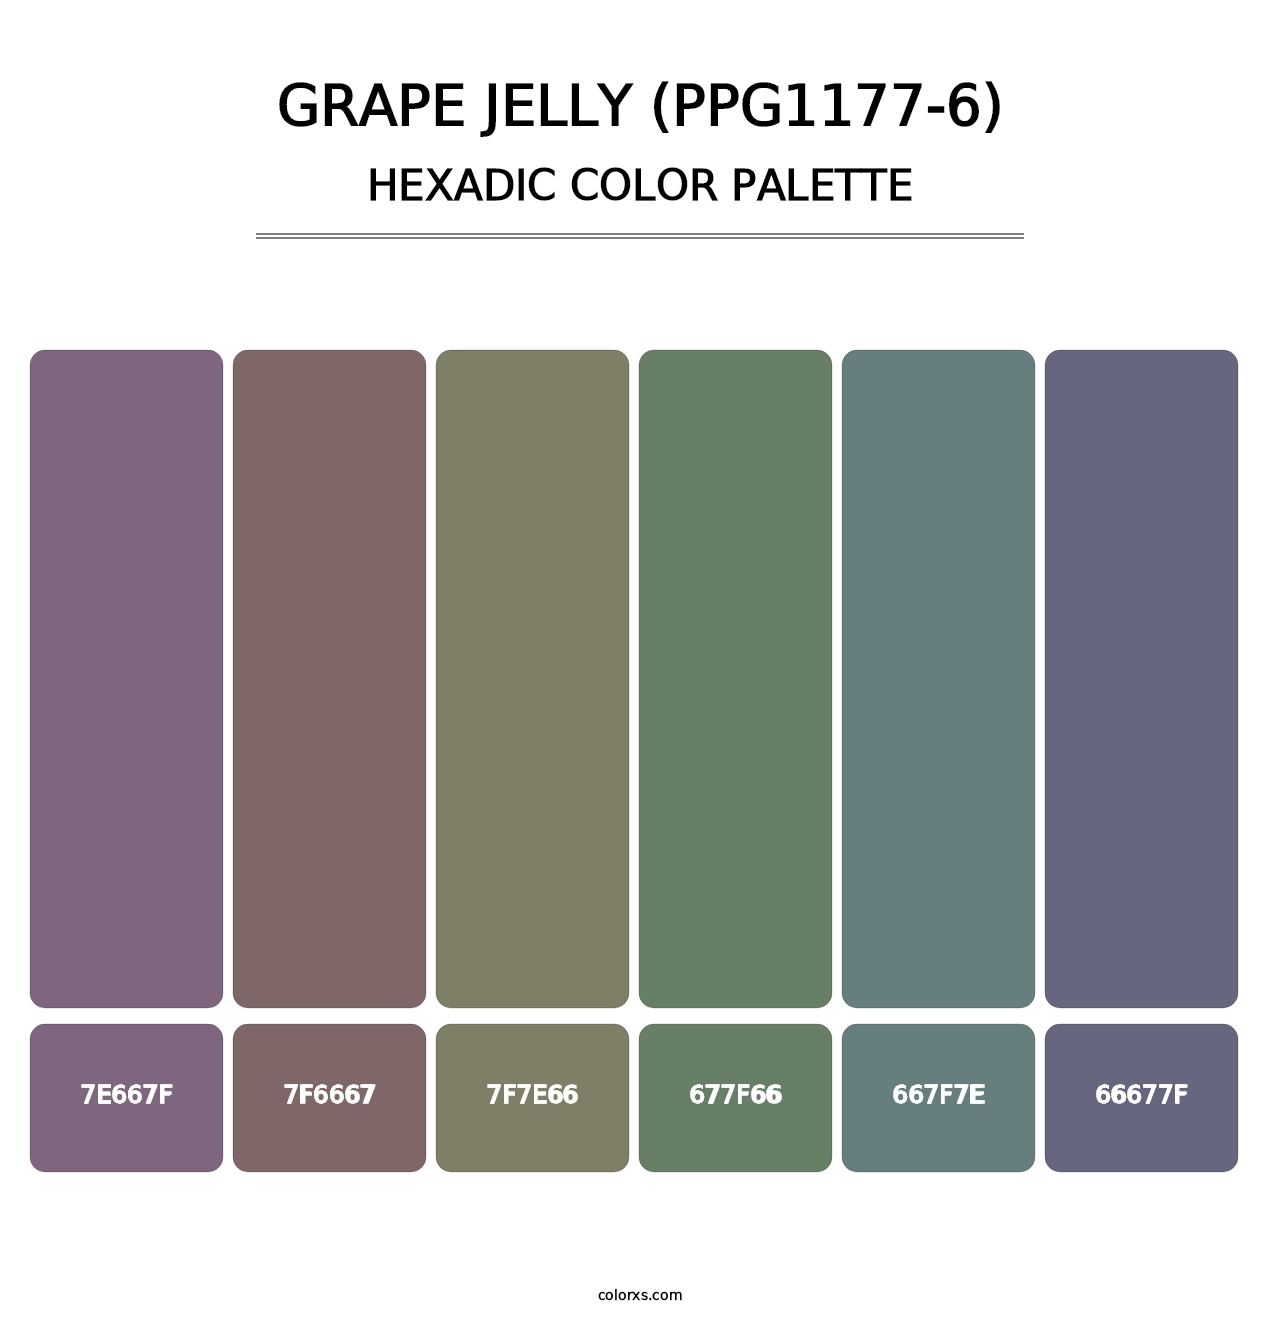 Grape Jelly (PPG1177-6) - Hexadic Color Palette